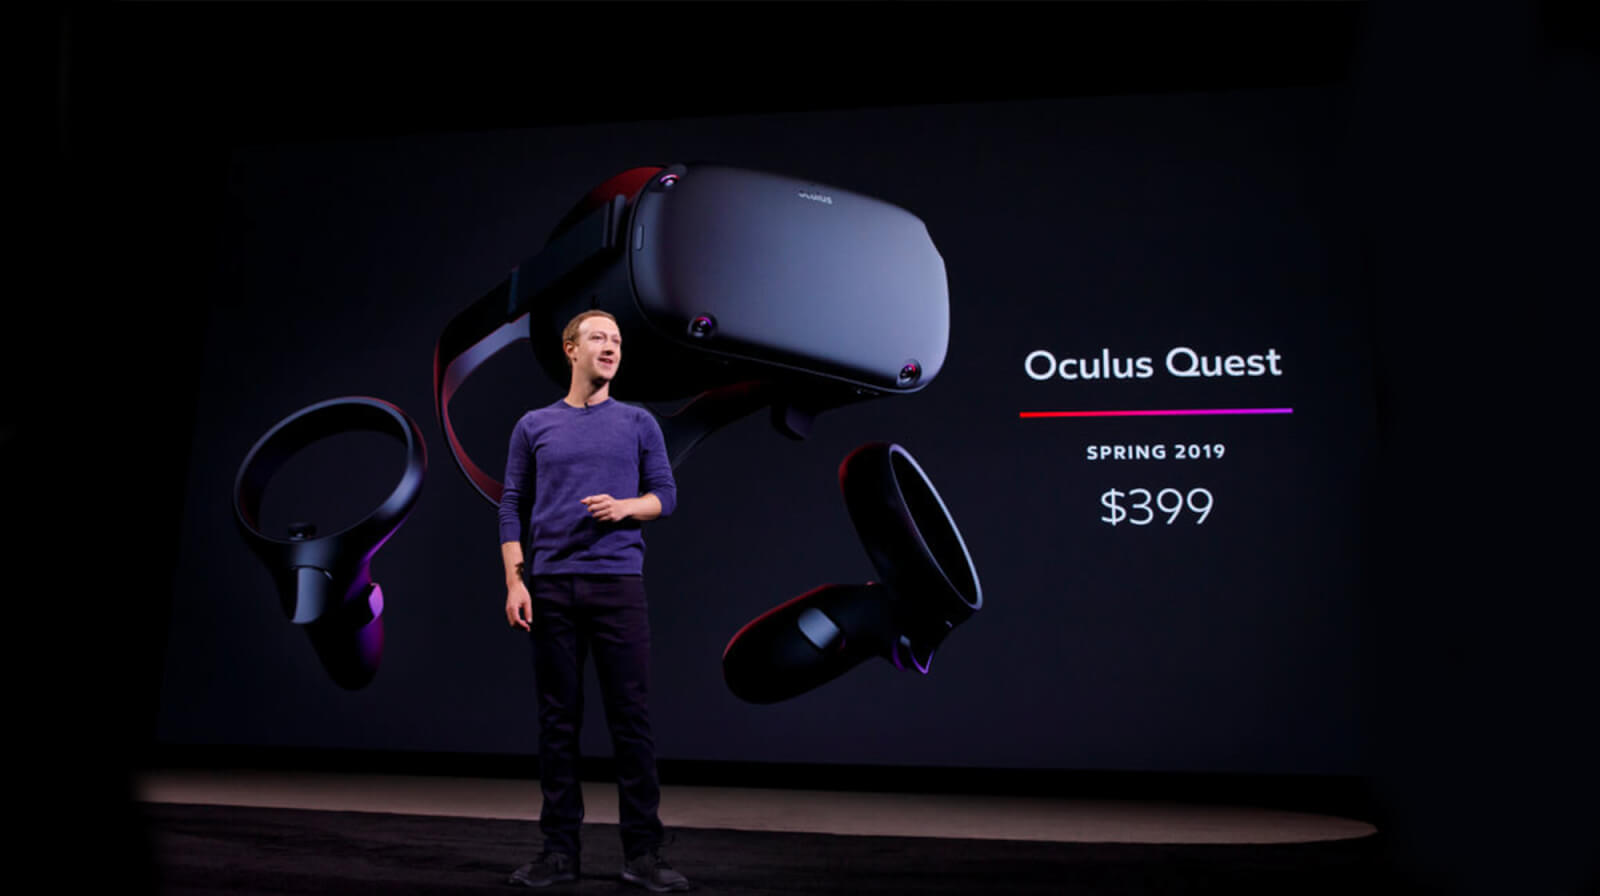 oculus quest standalone vr headset